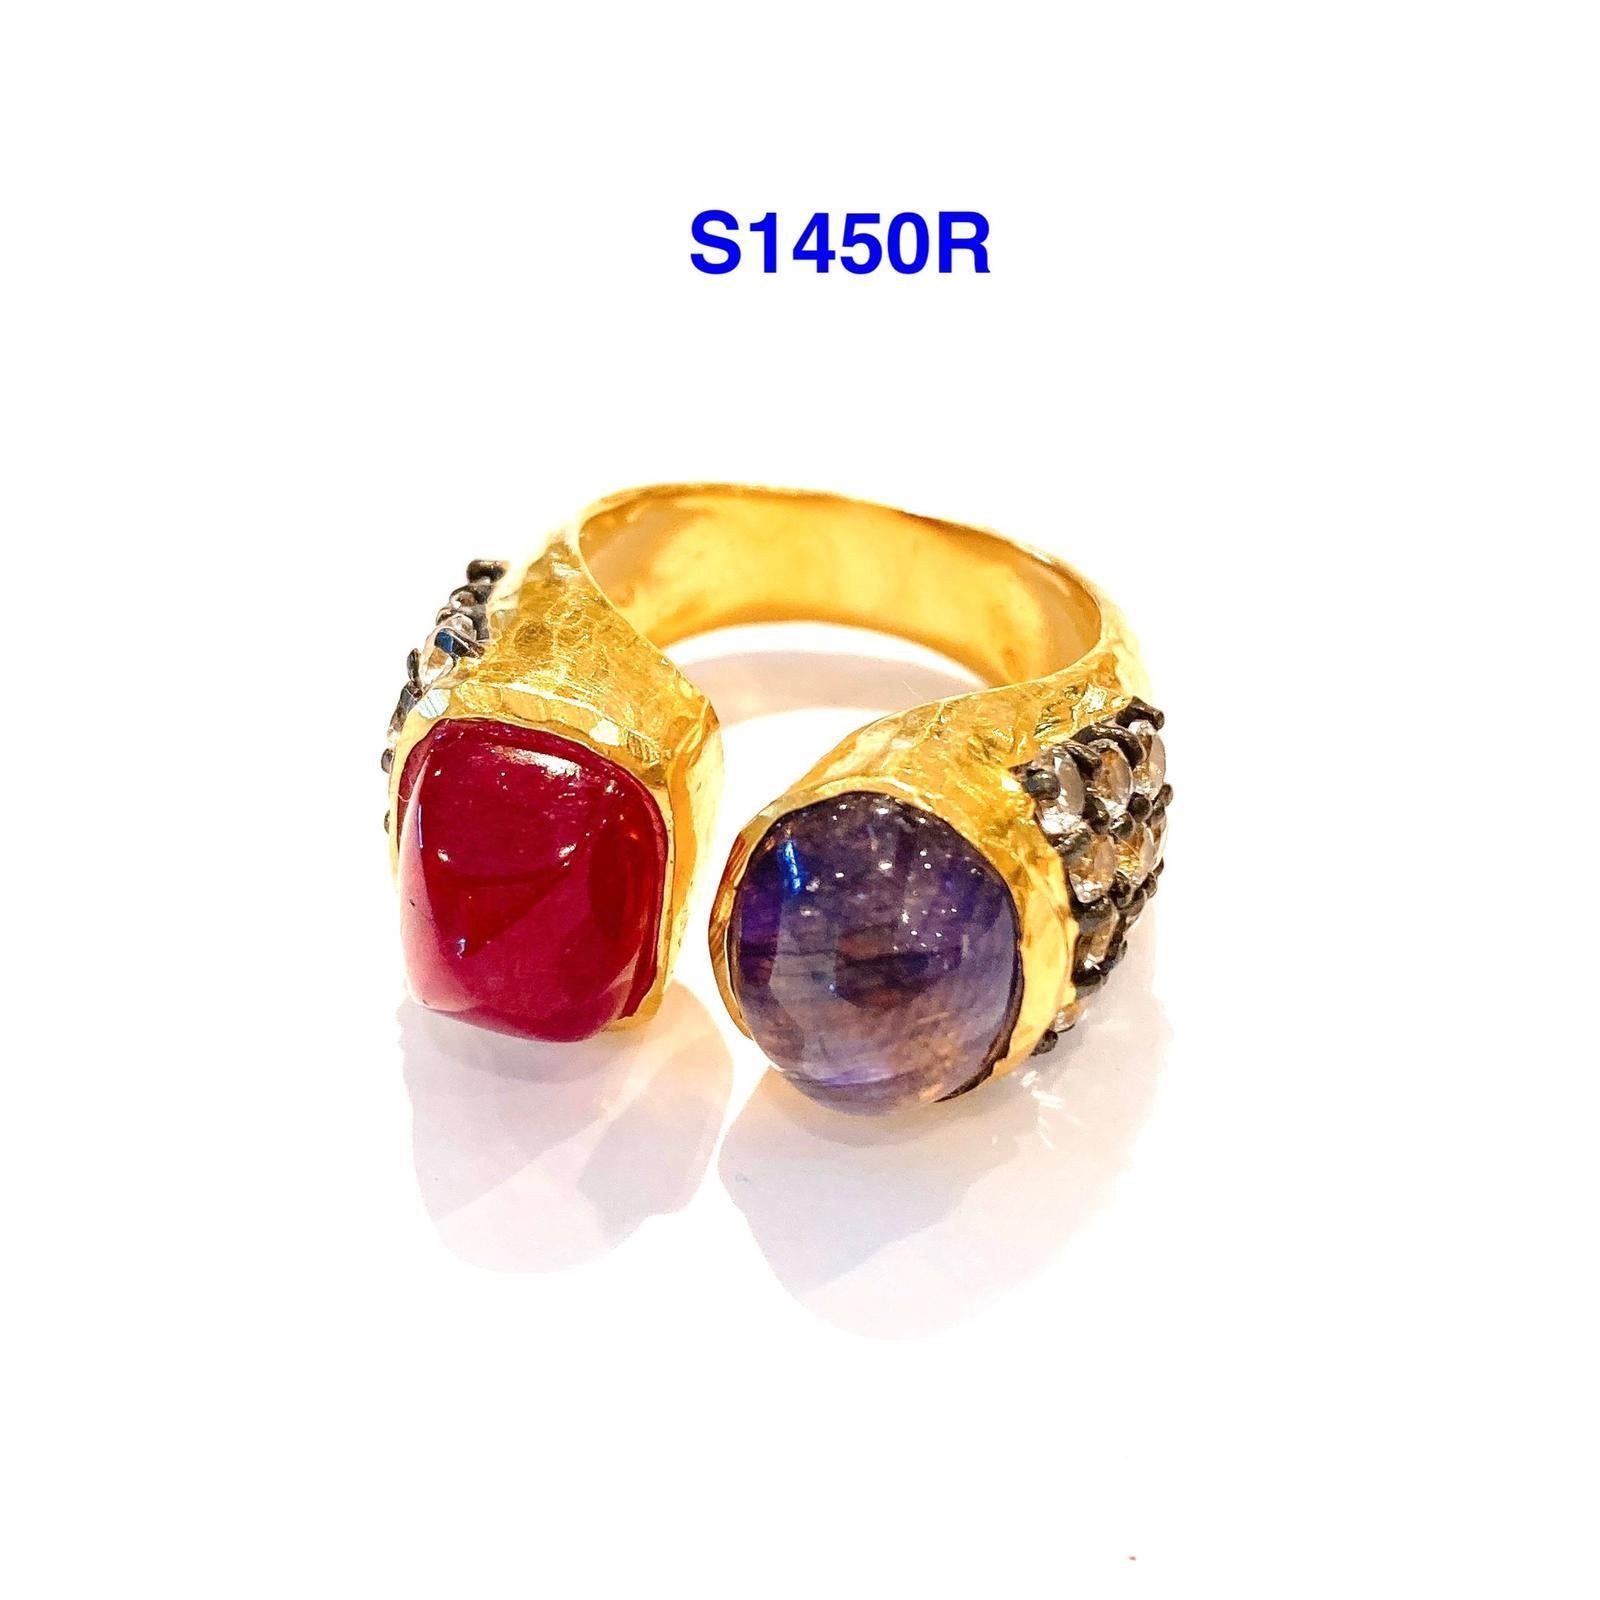 Brilliant Cut Bochic “Orient” Ruby & Sapphire Ring Set in 22k Gold & Silver